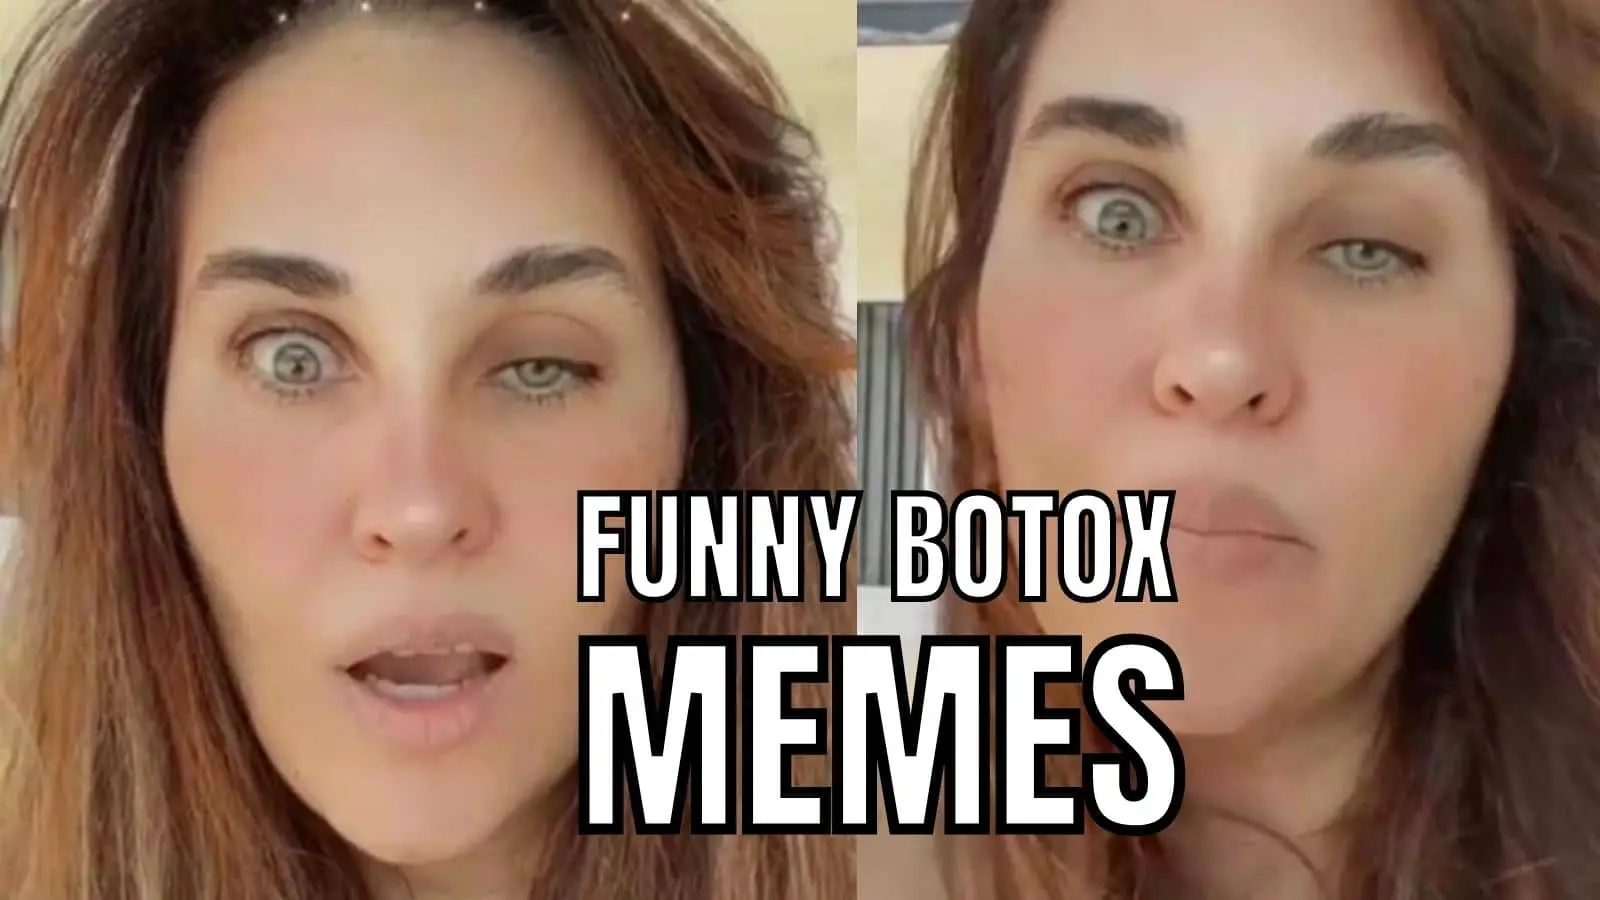 Botox Memes On Side Effect